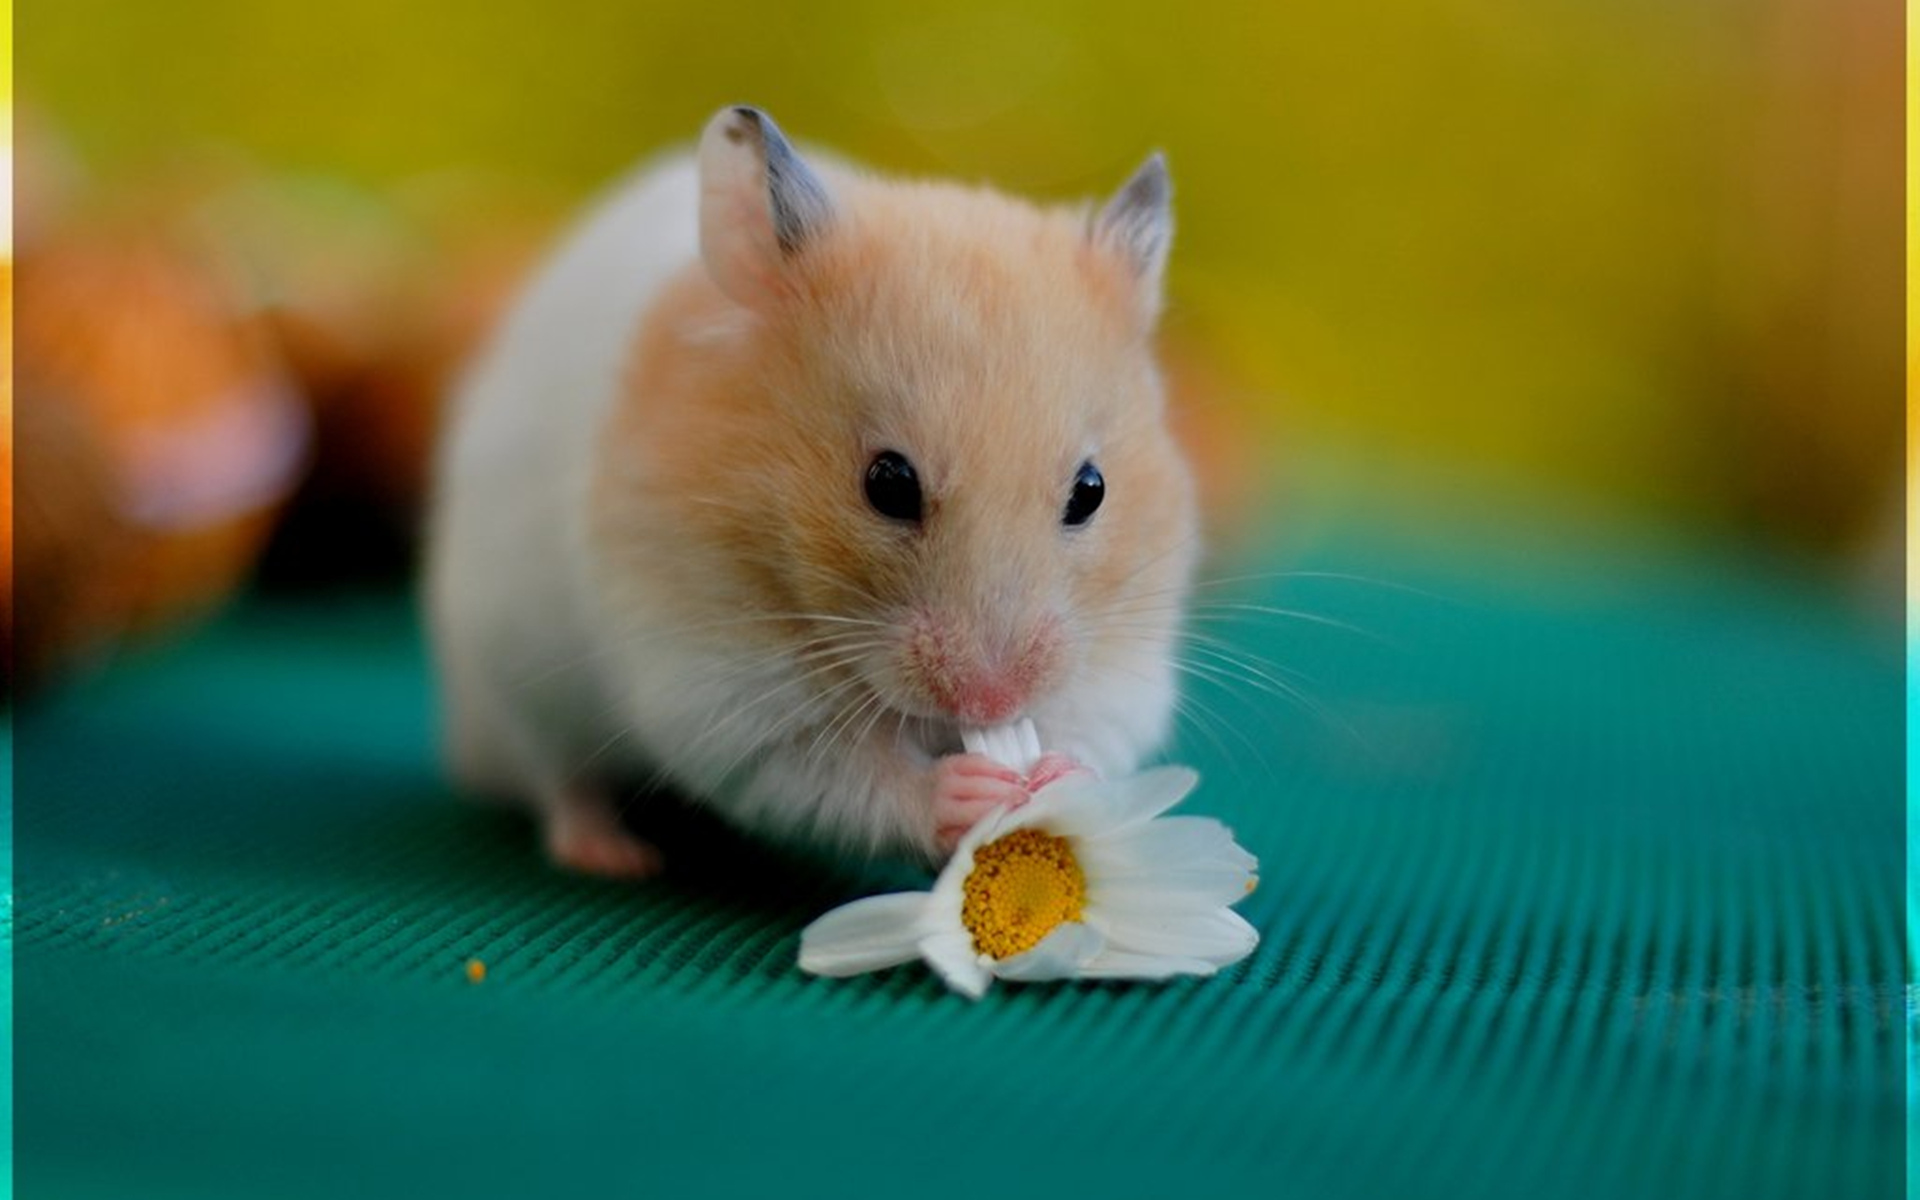 1000+ ideas about Hamster Wallpaper on Pinterest | Hamsters, Cute